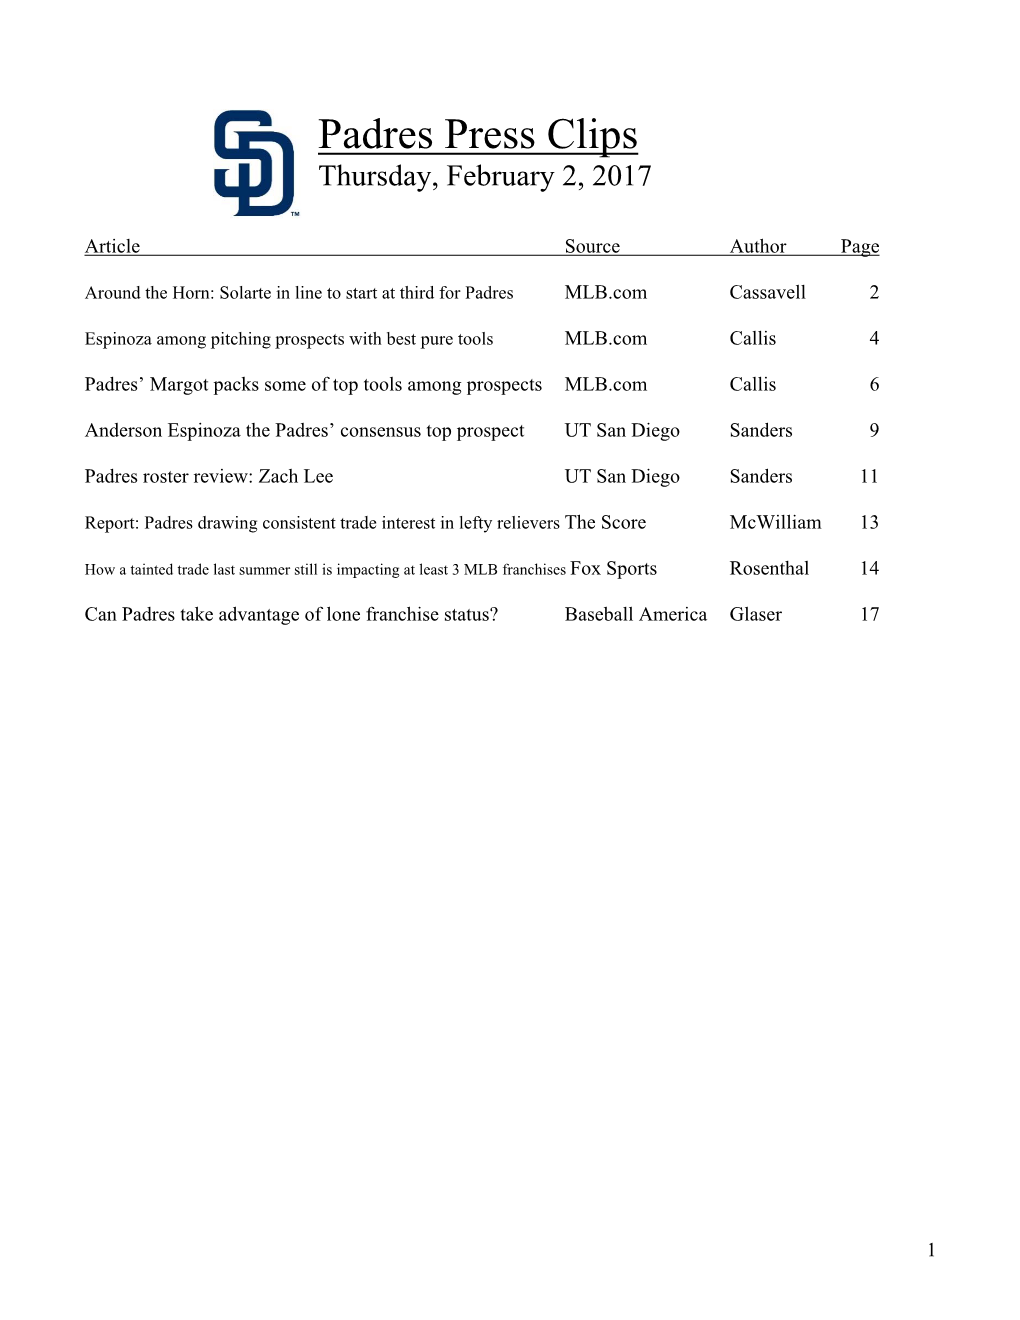 Padres Press Clips Thursday, February 2, 2017